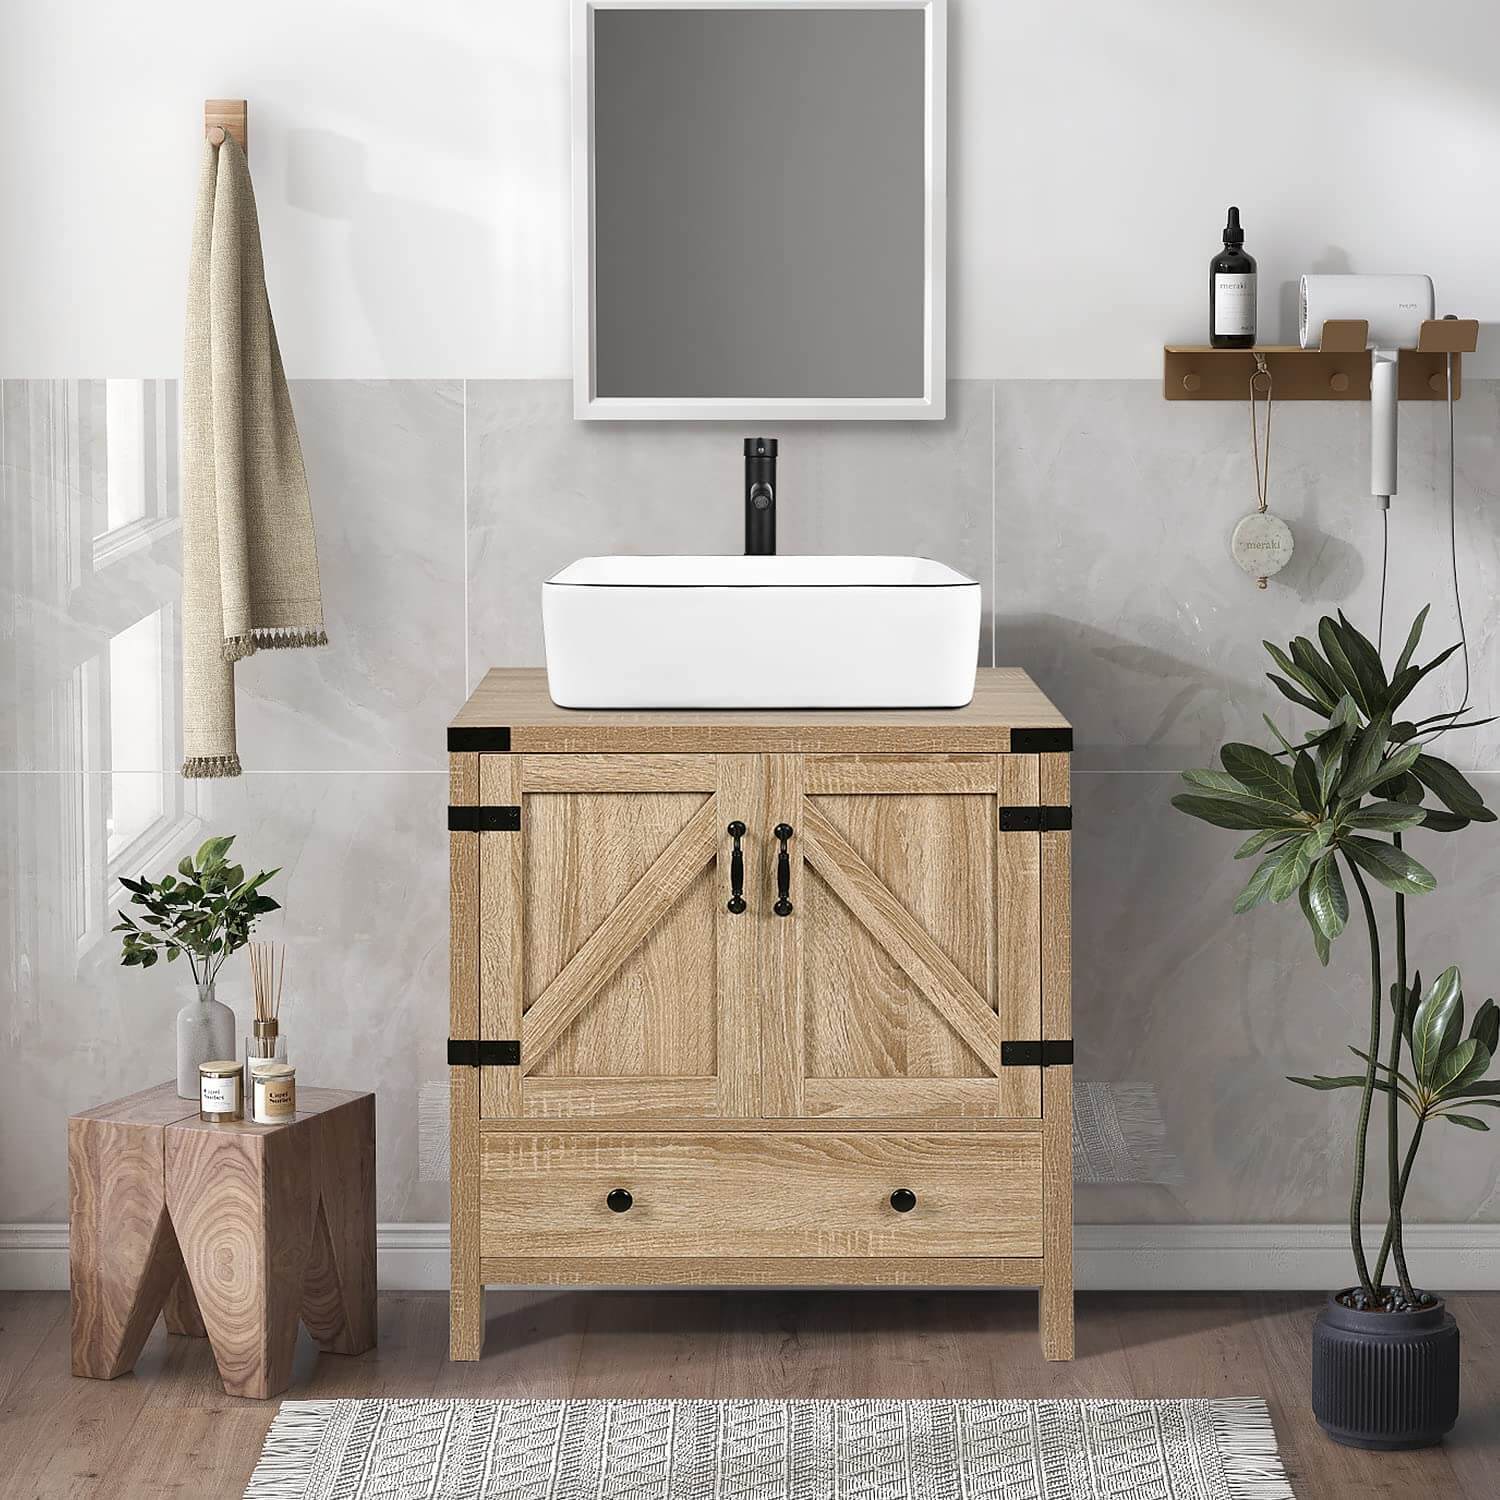 Details display of Elecwish 28" Bathroom Vanity Wood Fixture Stand Bathroom Cabinet with sink and mirror display scene